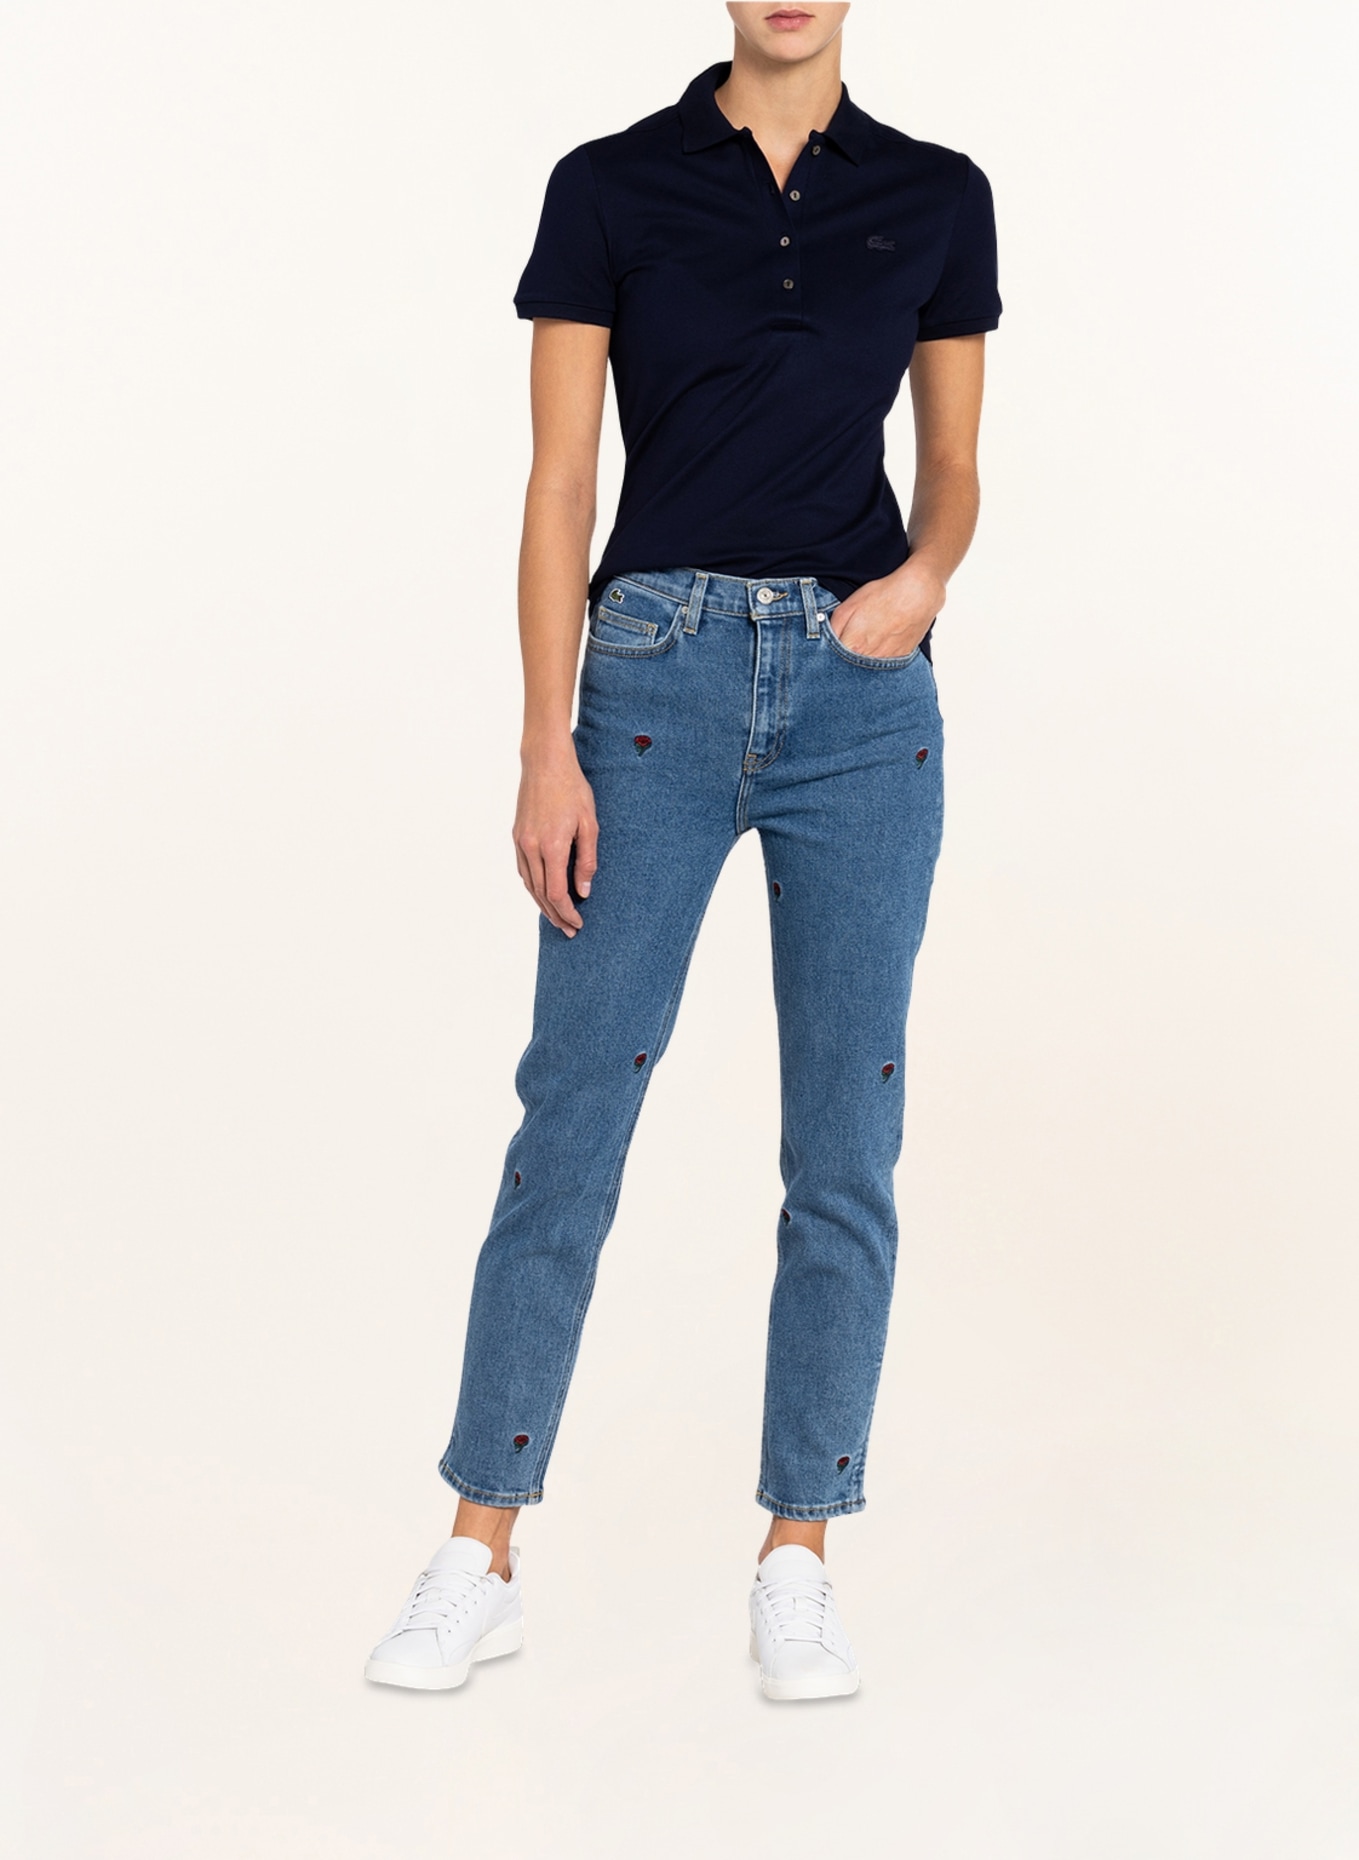 LACOSTE Piqué-Poloshirt Slim Fit, Farbe: NAVY (Bild 2)